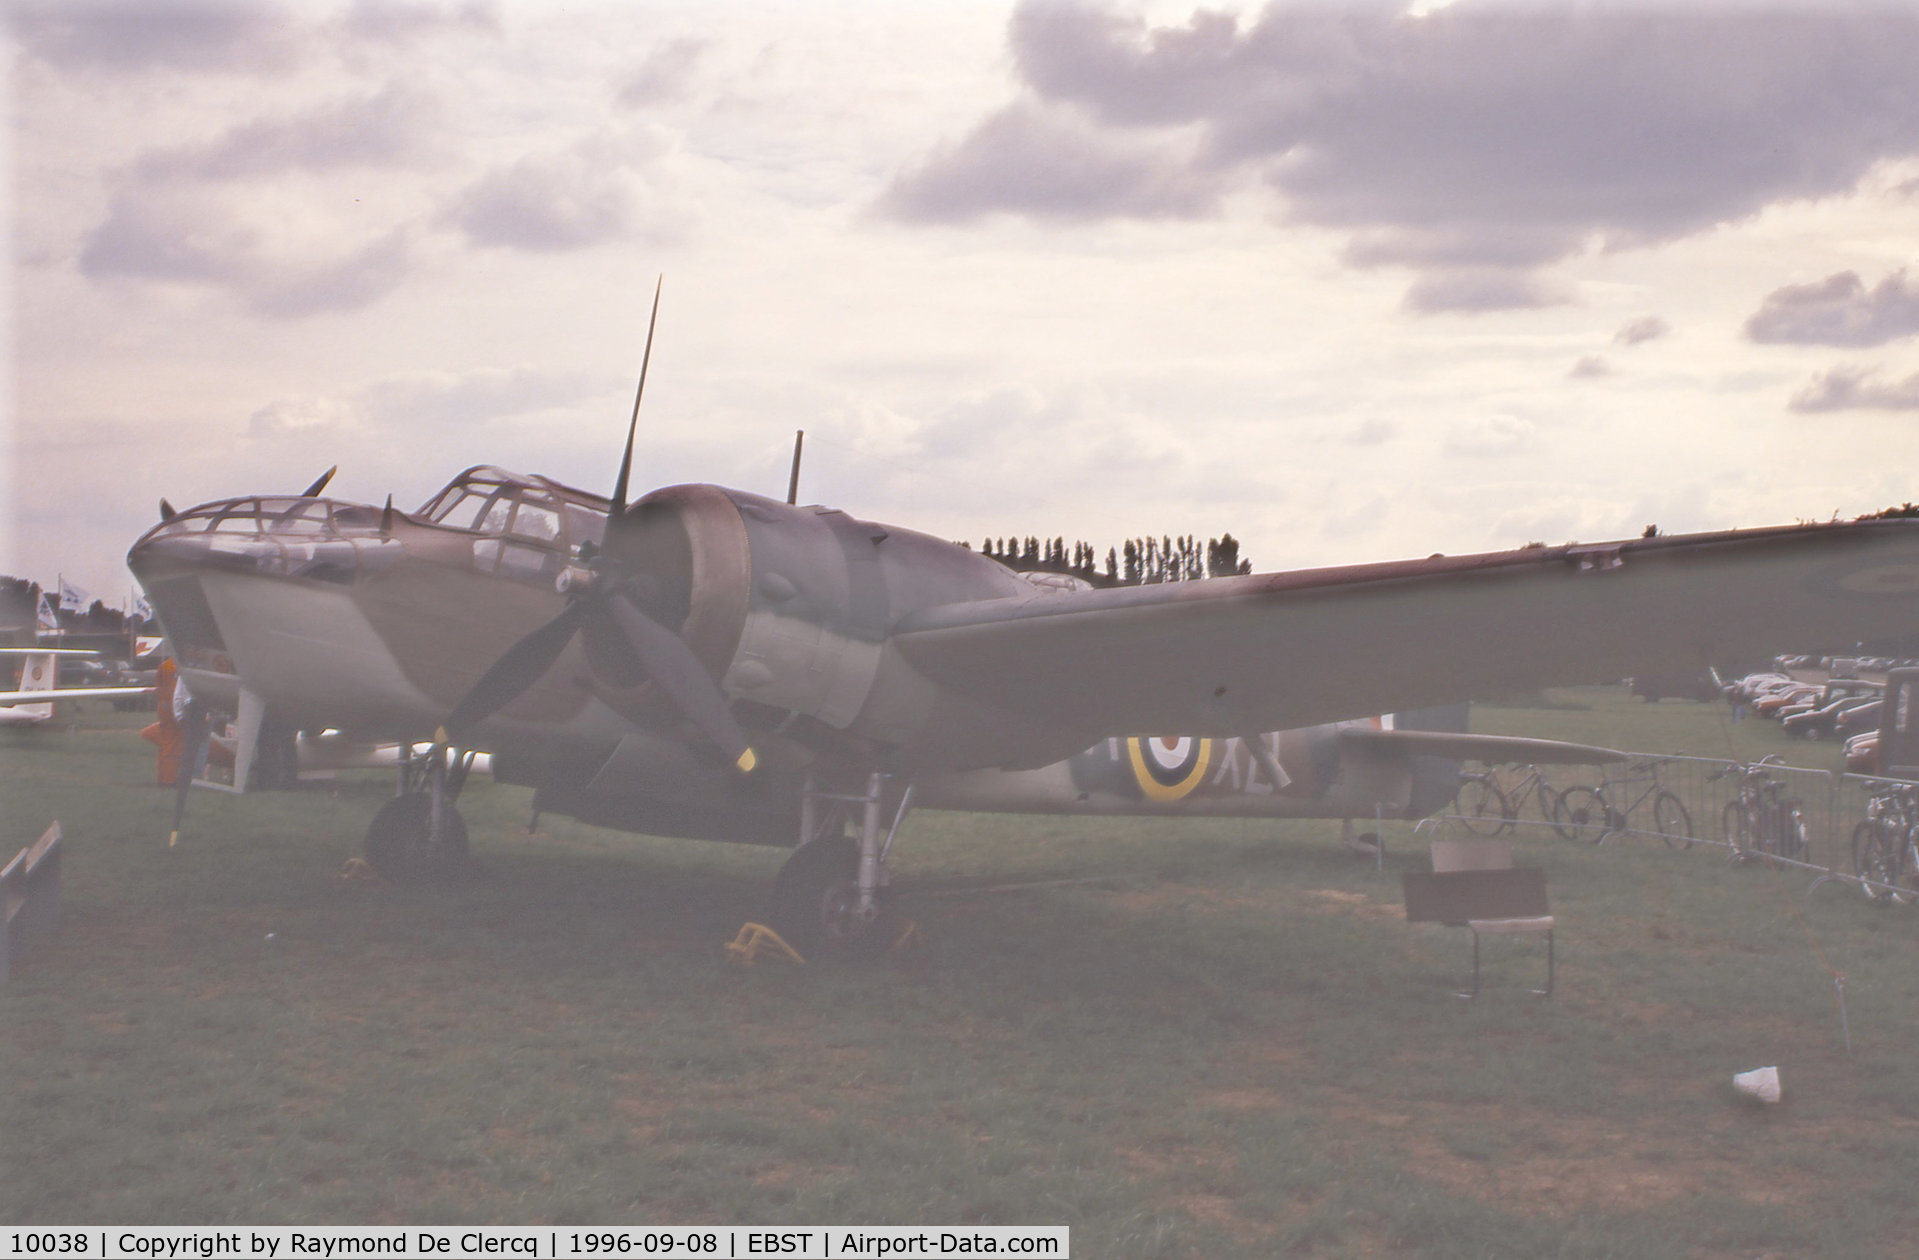 10038, Bristol 149 Bolingbroke Mk.IVT C/N 880-207, On display at the Brustem airshow 1996.
Former RCAF  9895.